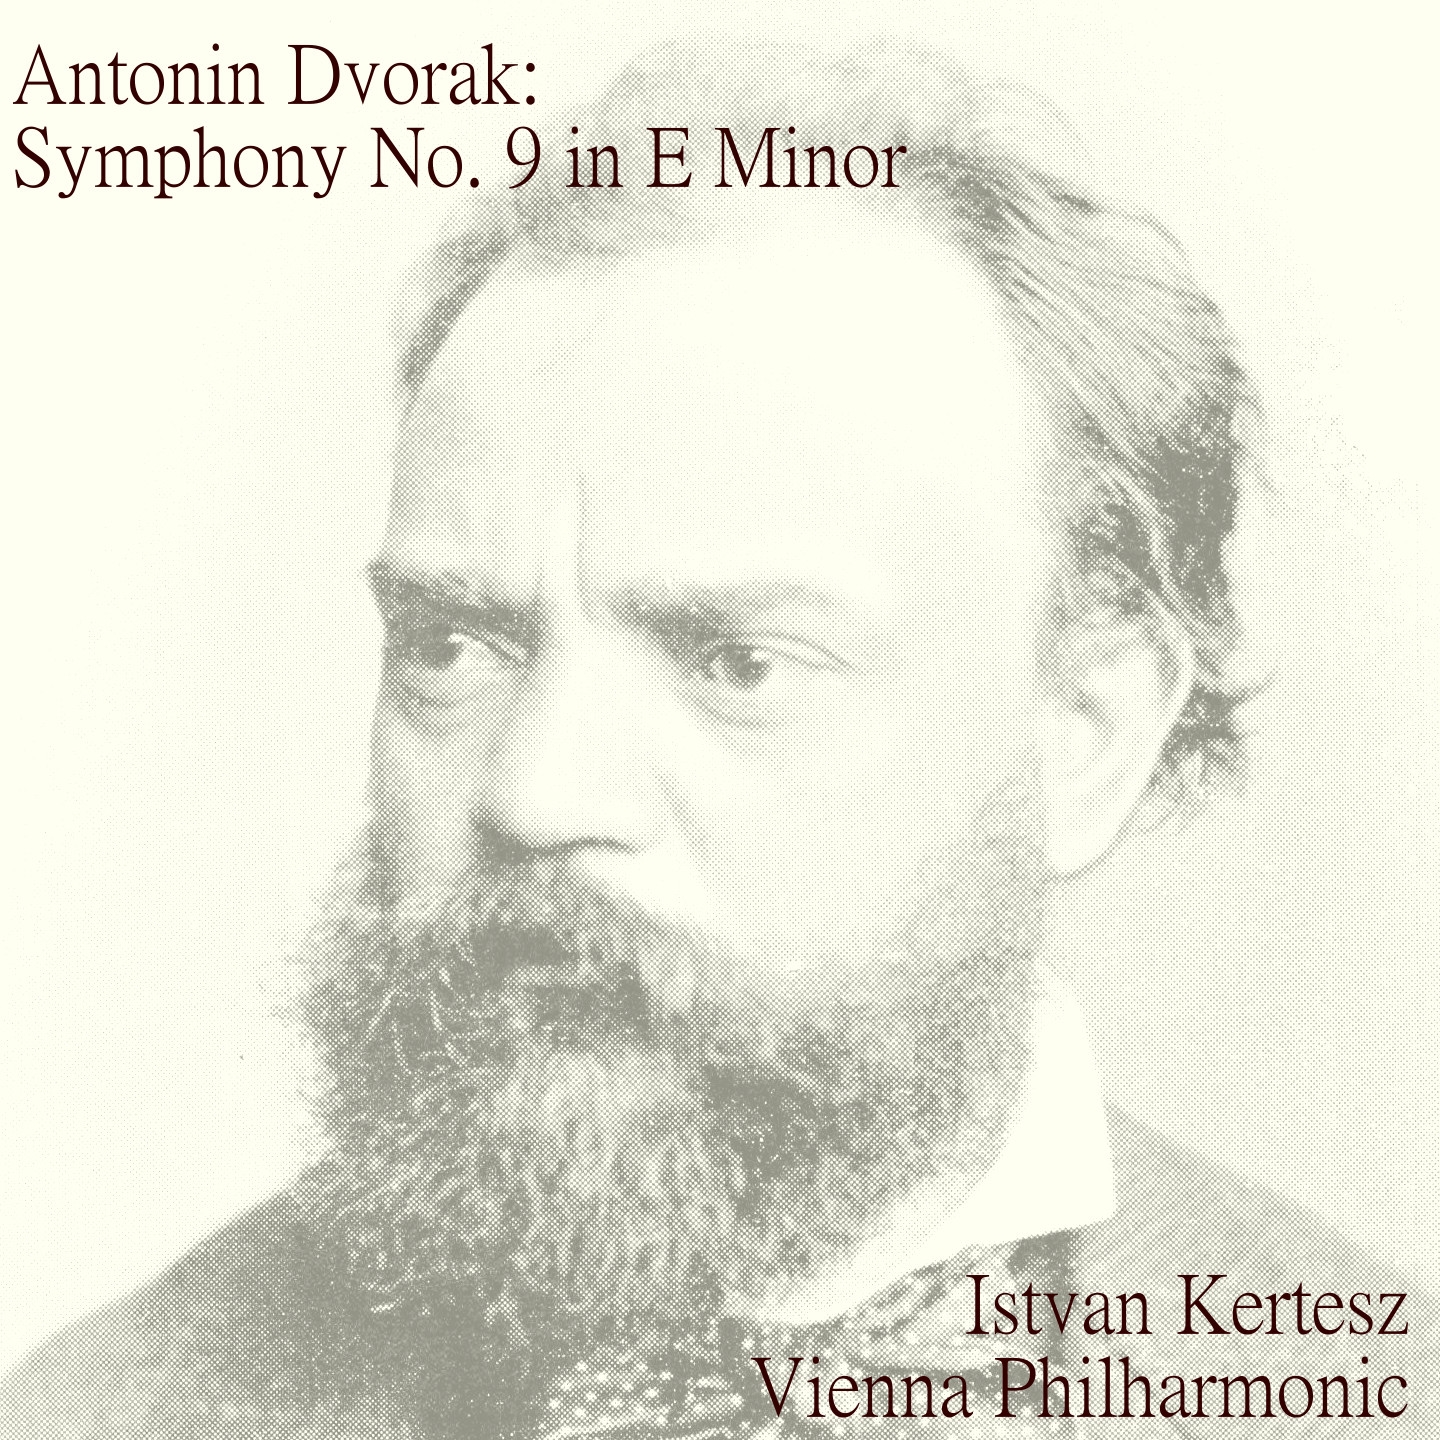 Dvorák: Symphony No. 9 in E minor, op. 95 "From the New World"